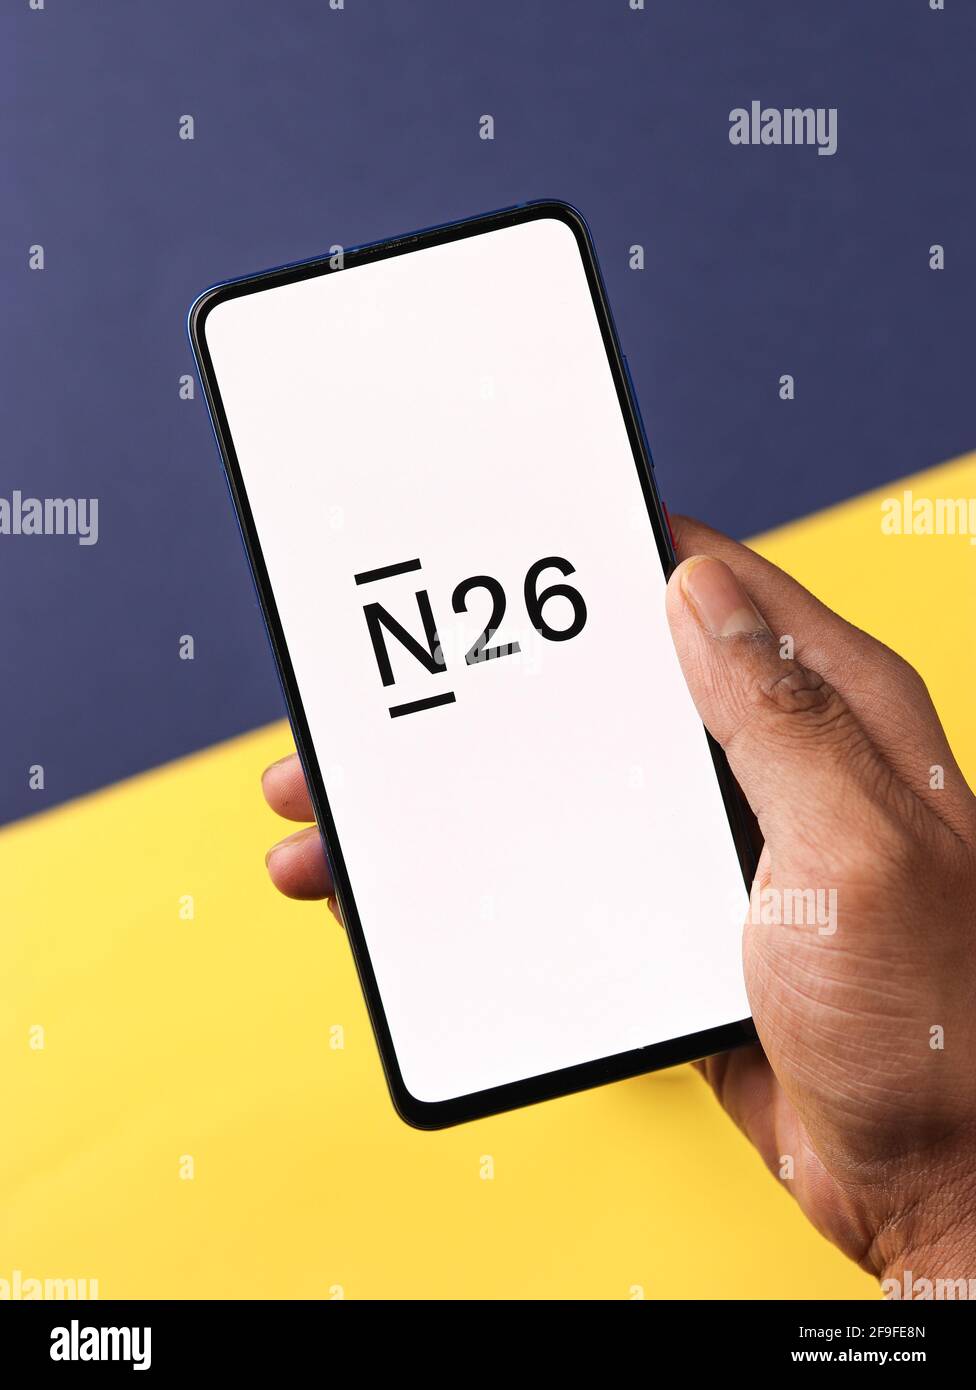 Assam, india - April 19, 2021 : N26 logo on phone screen stock image. Stock Photo